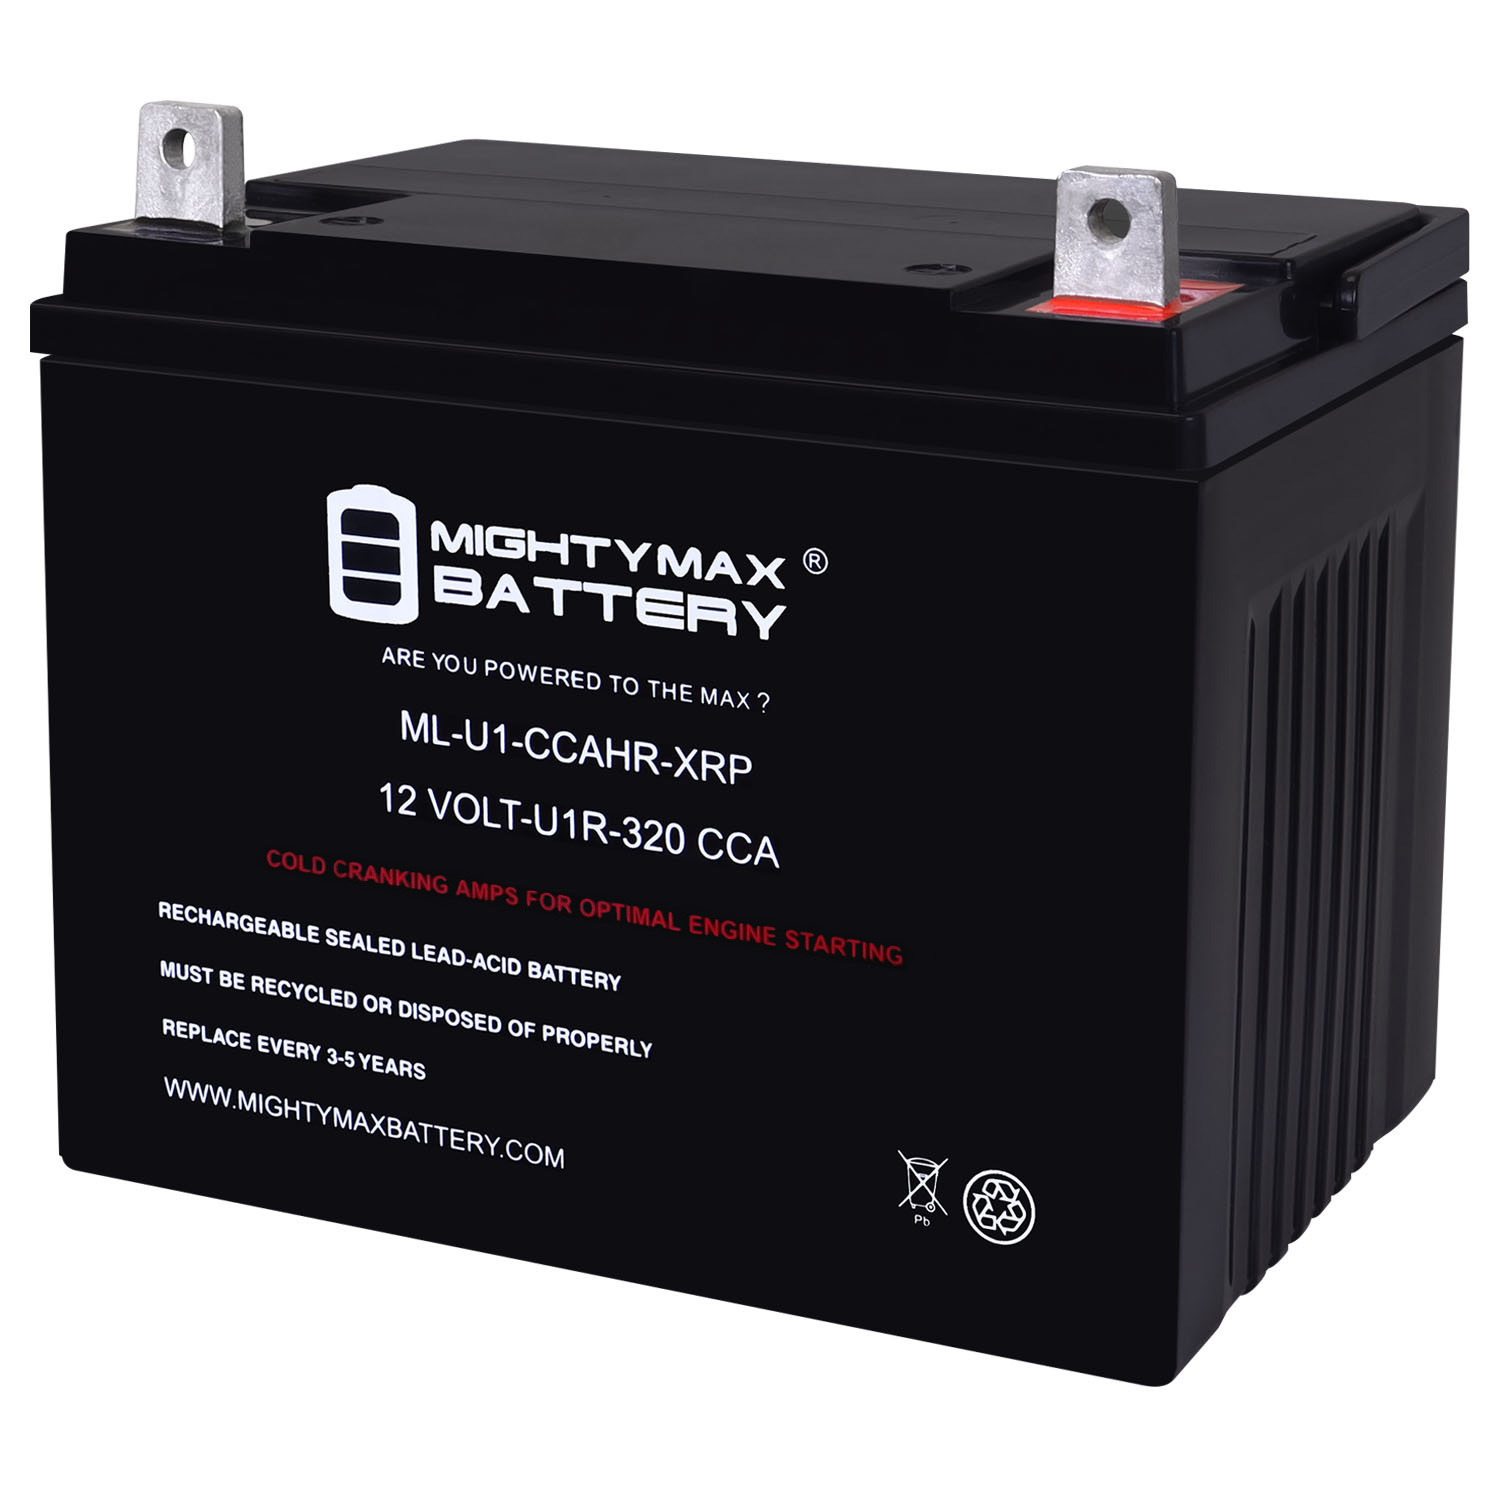 ML-U1-CCAHR-XRP -12 Volt, 320 CCA, Nut and Bolt (NB) Terminal, Rechargeable SLA AGM Battery